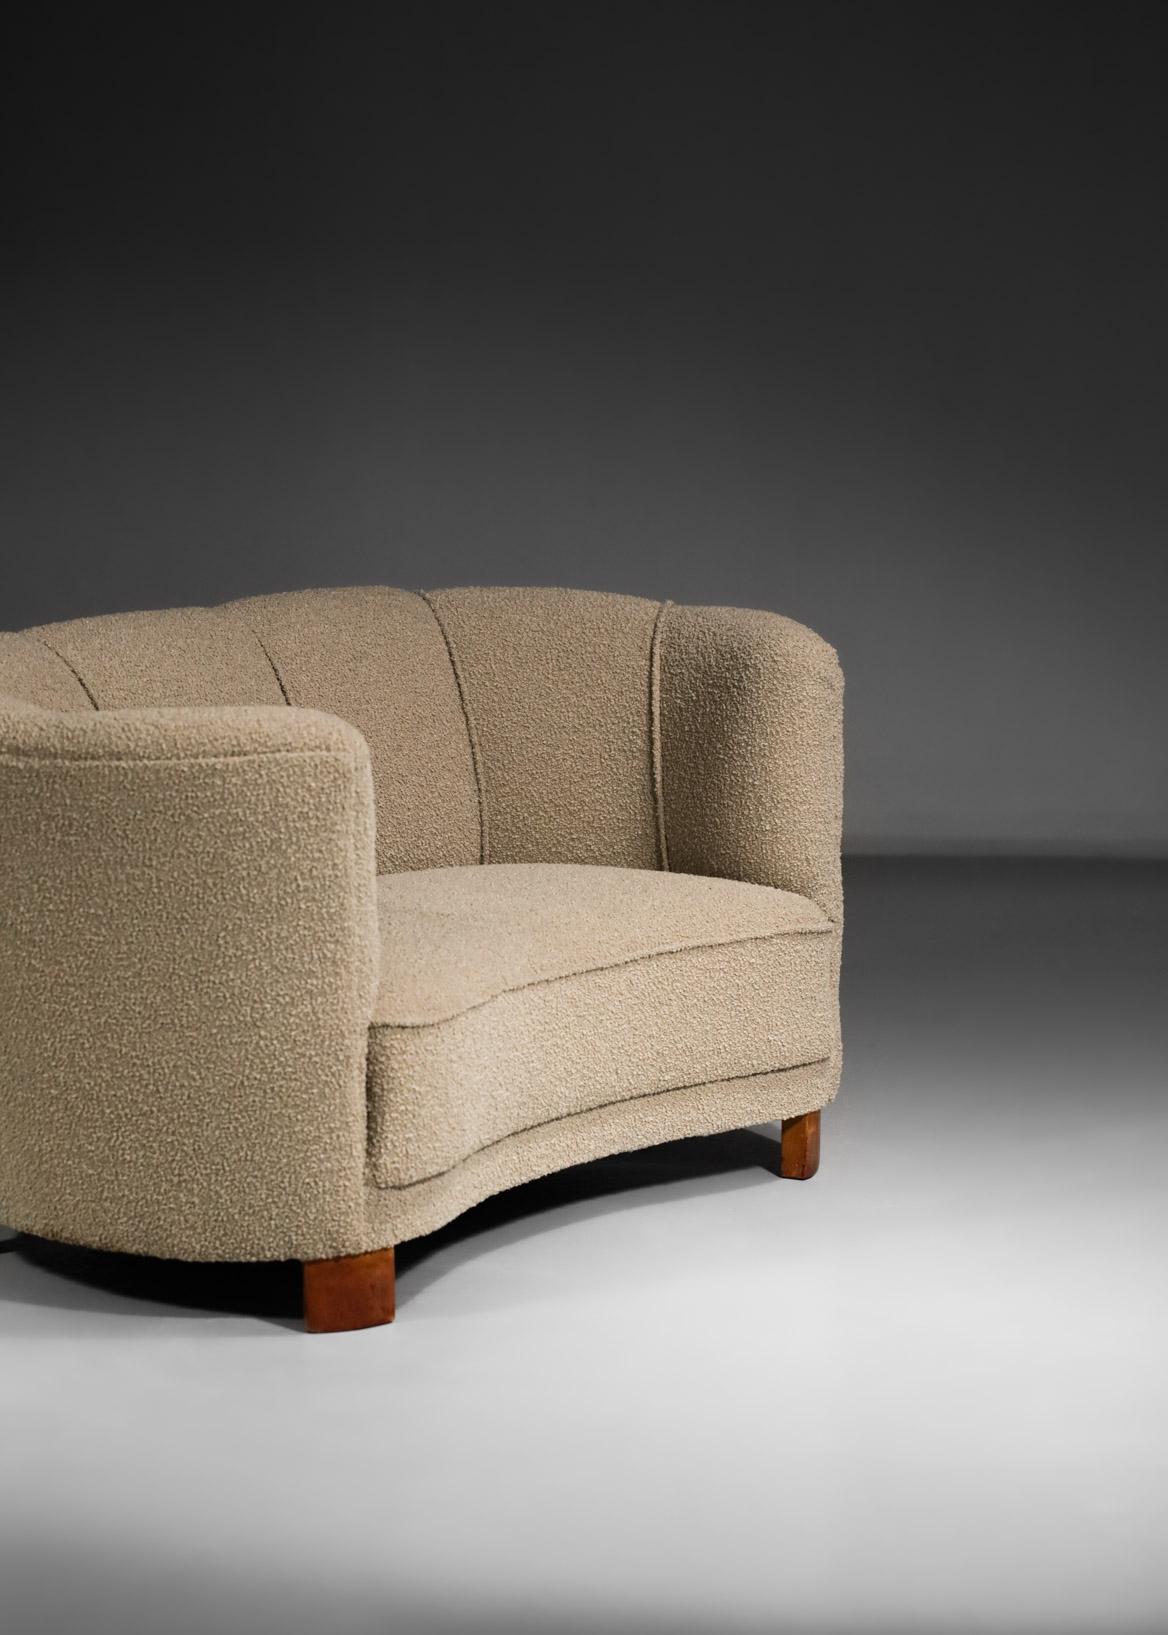 Rare Danish Sofa from the 40's Curved Beige Fabric Scandinavian Armchair 2